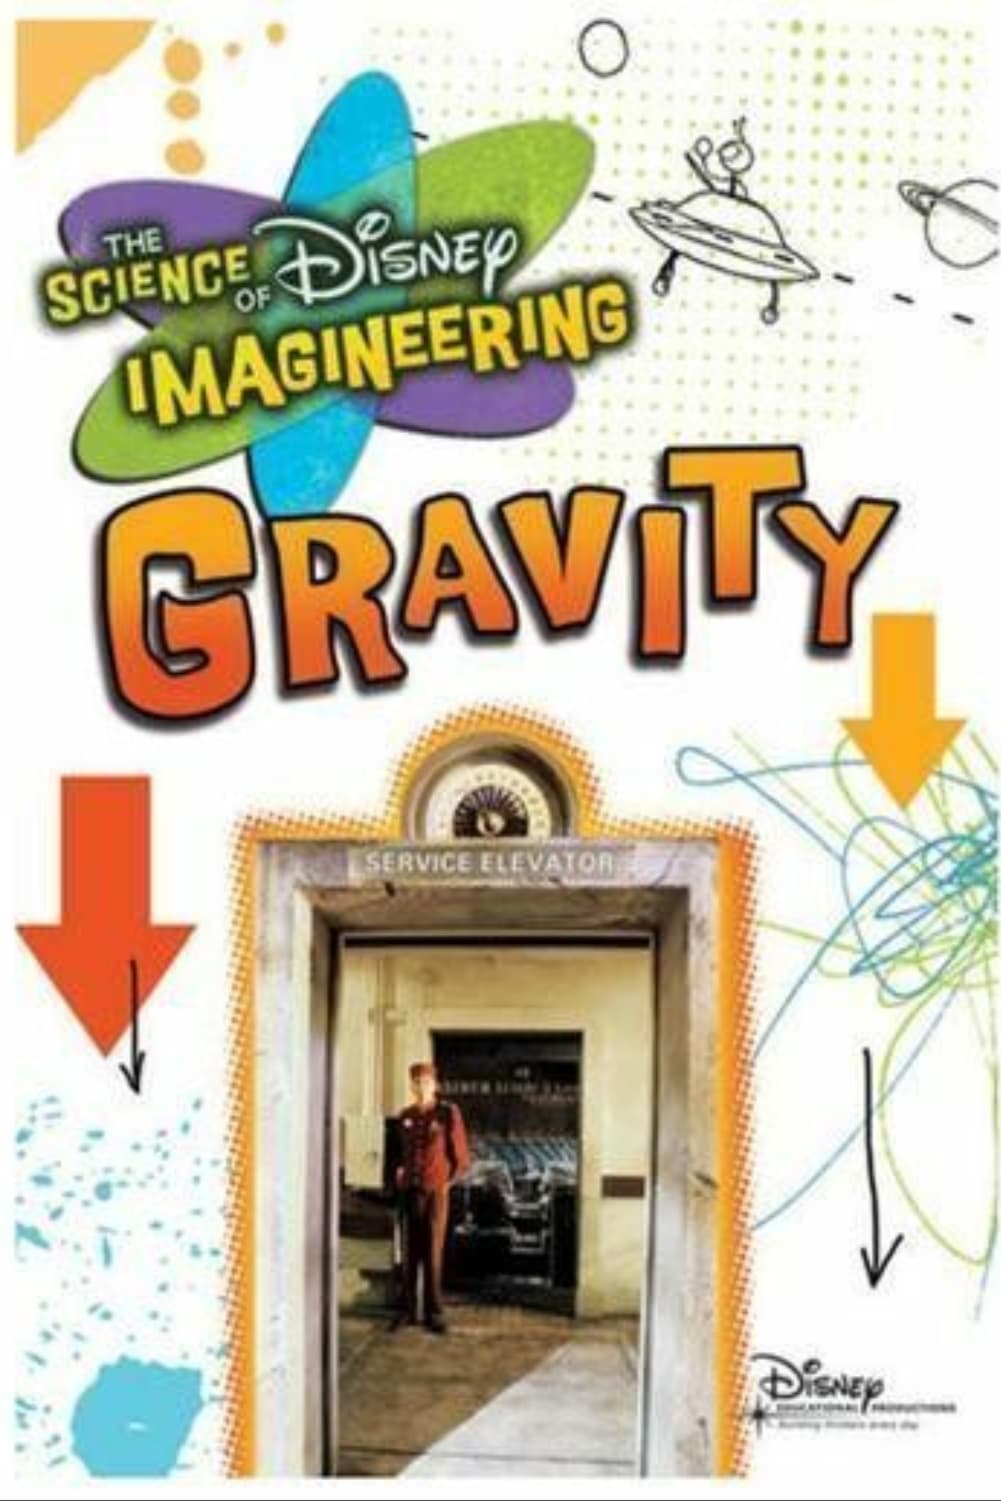 The Science of Disney Imagineering: Gravity